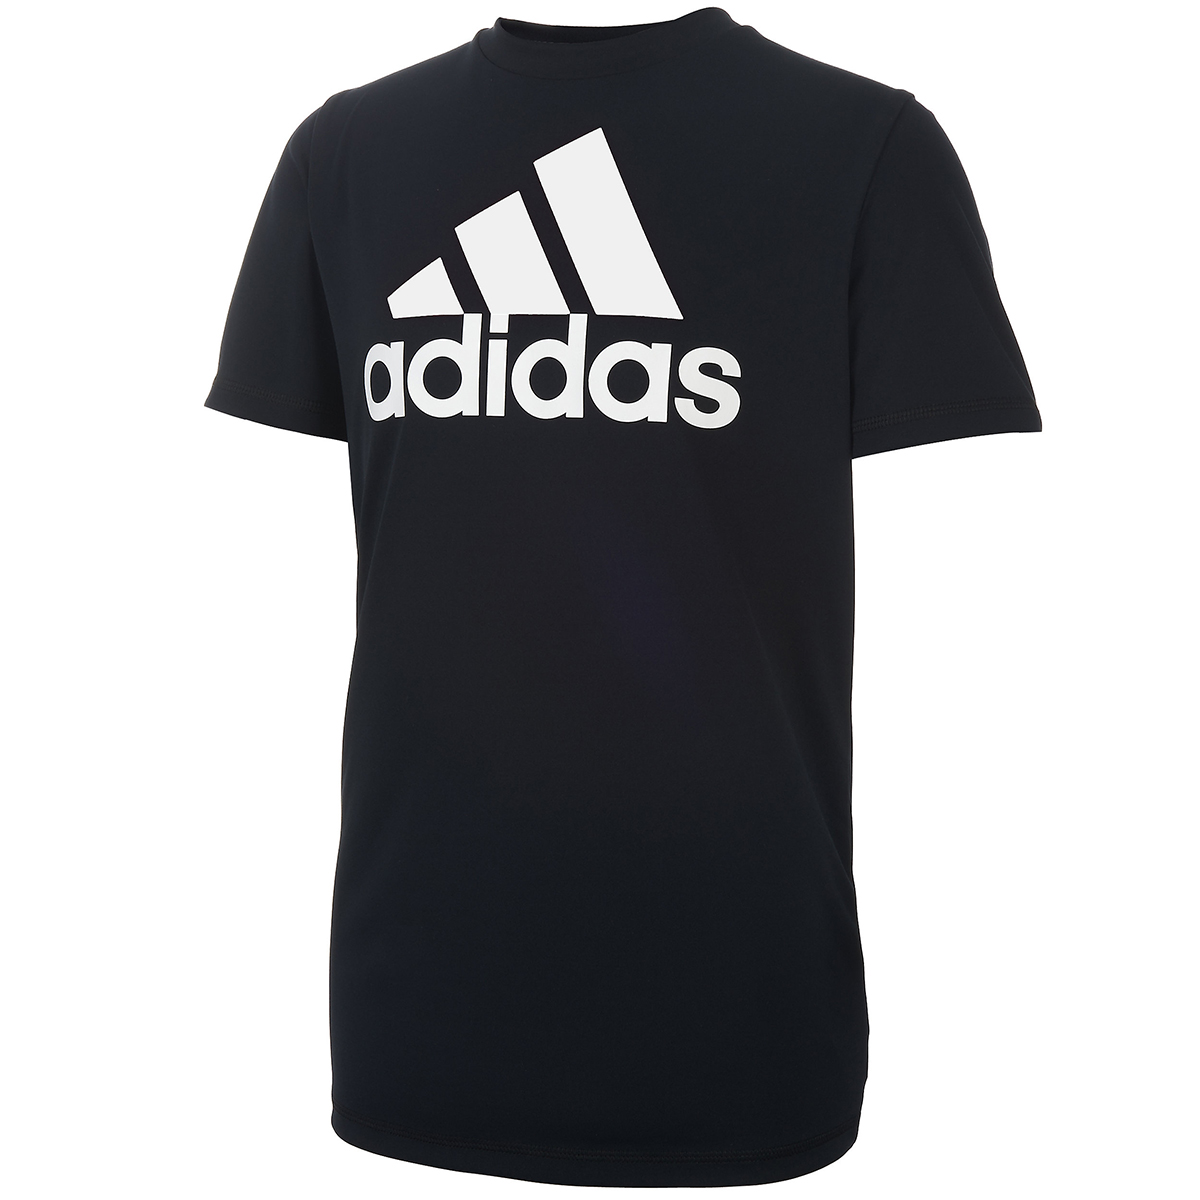 Adidas Boys' Climalite Performance Logo Tee - Black, M